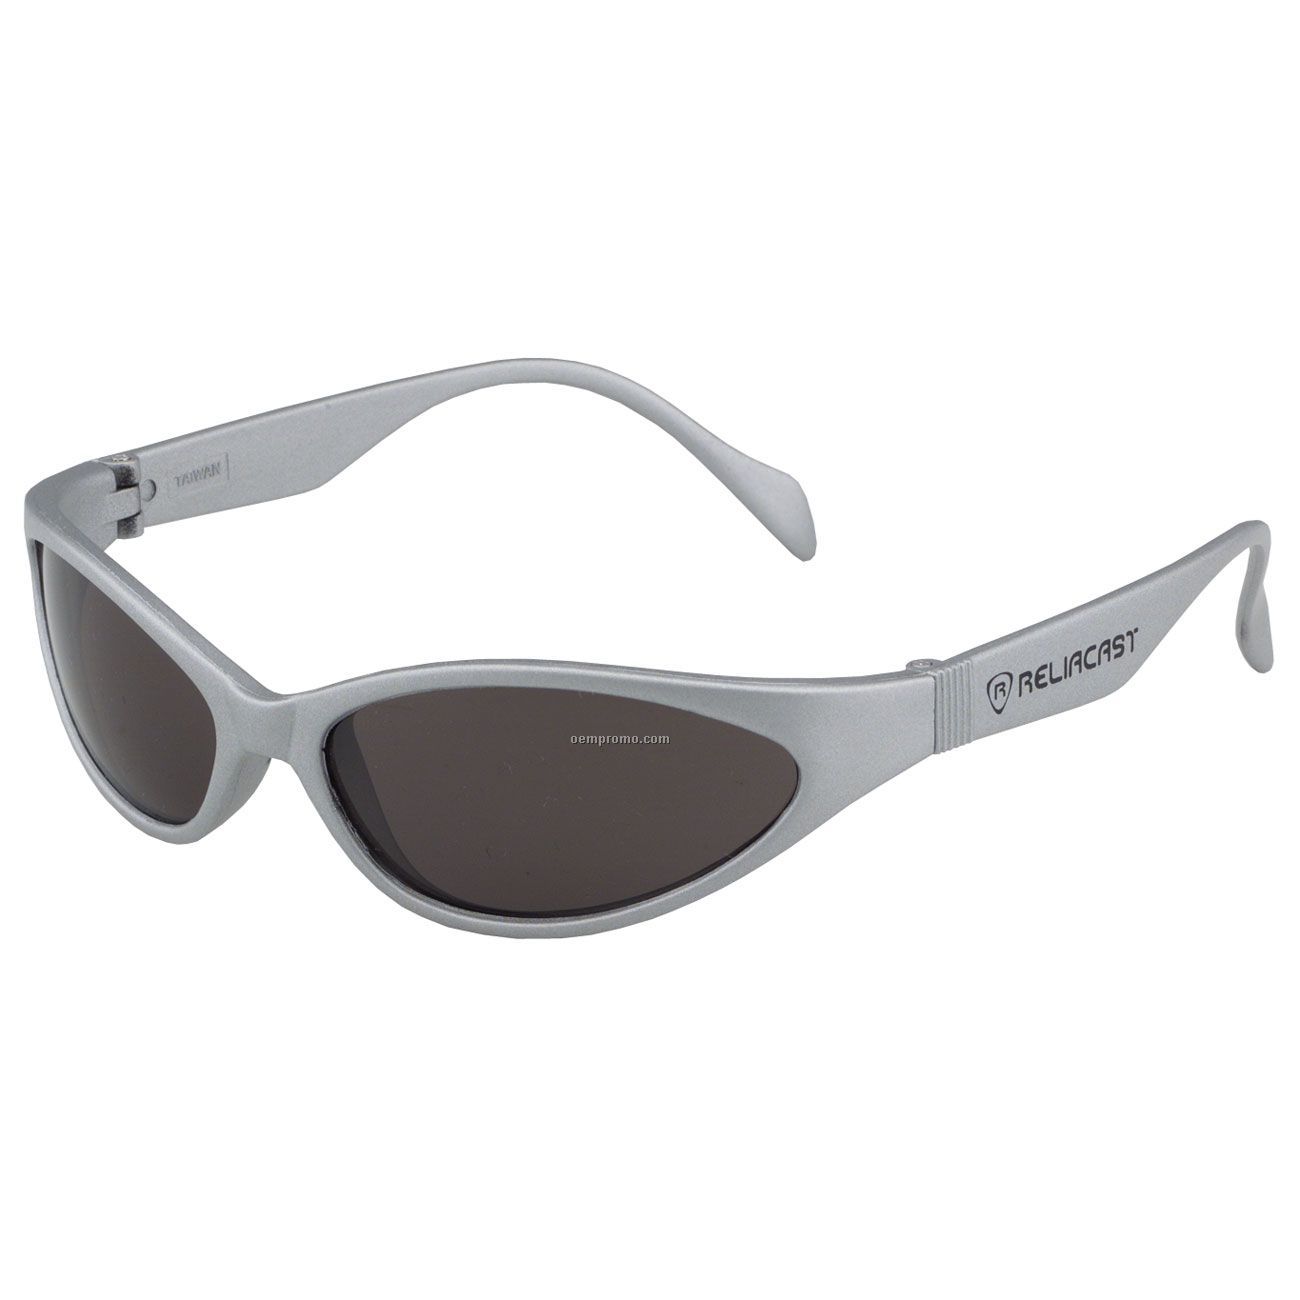 Snake Wrap Silver Nylon Frame Sunglasses W/ Gray Lens